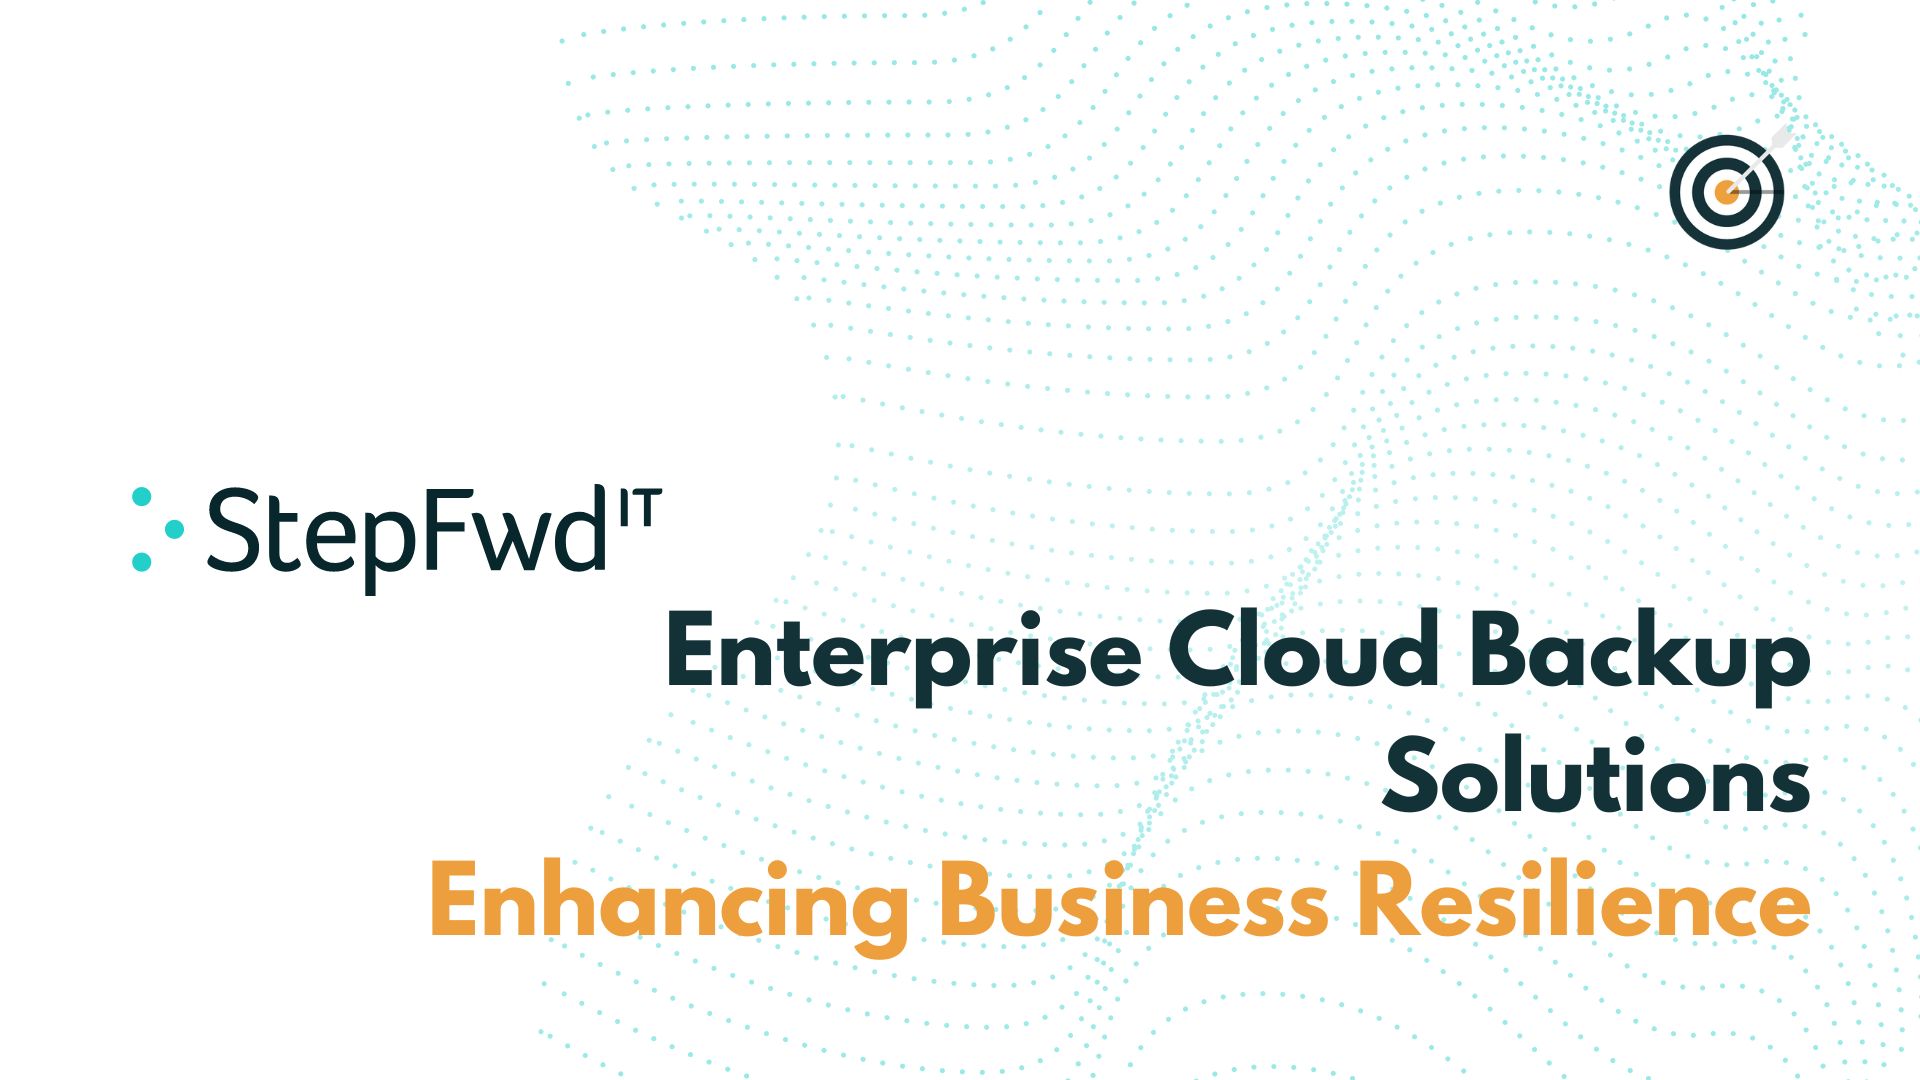 Enterprise Cloud Backup Solutions: Enhancing Business Resilience